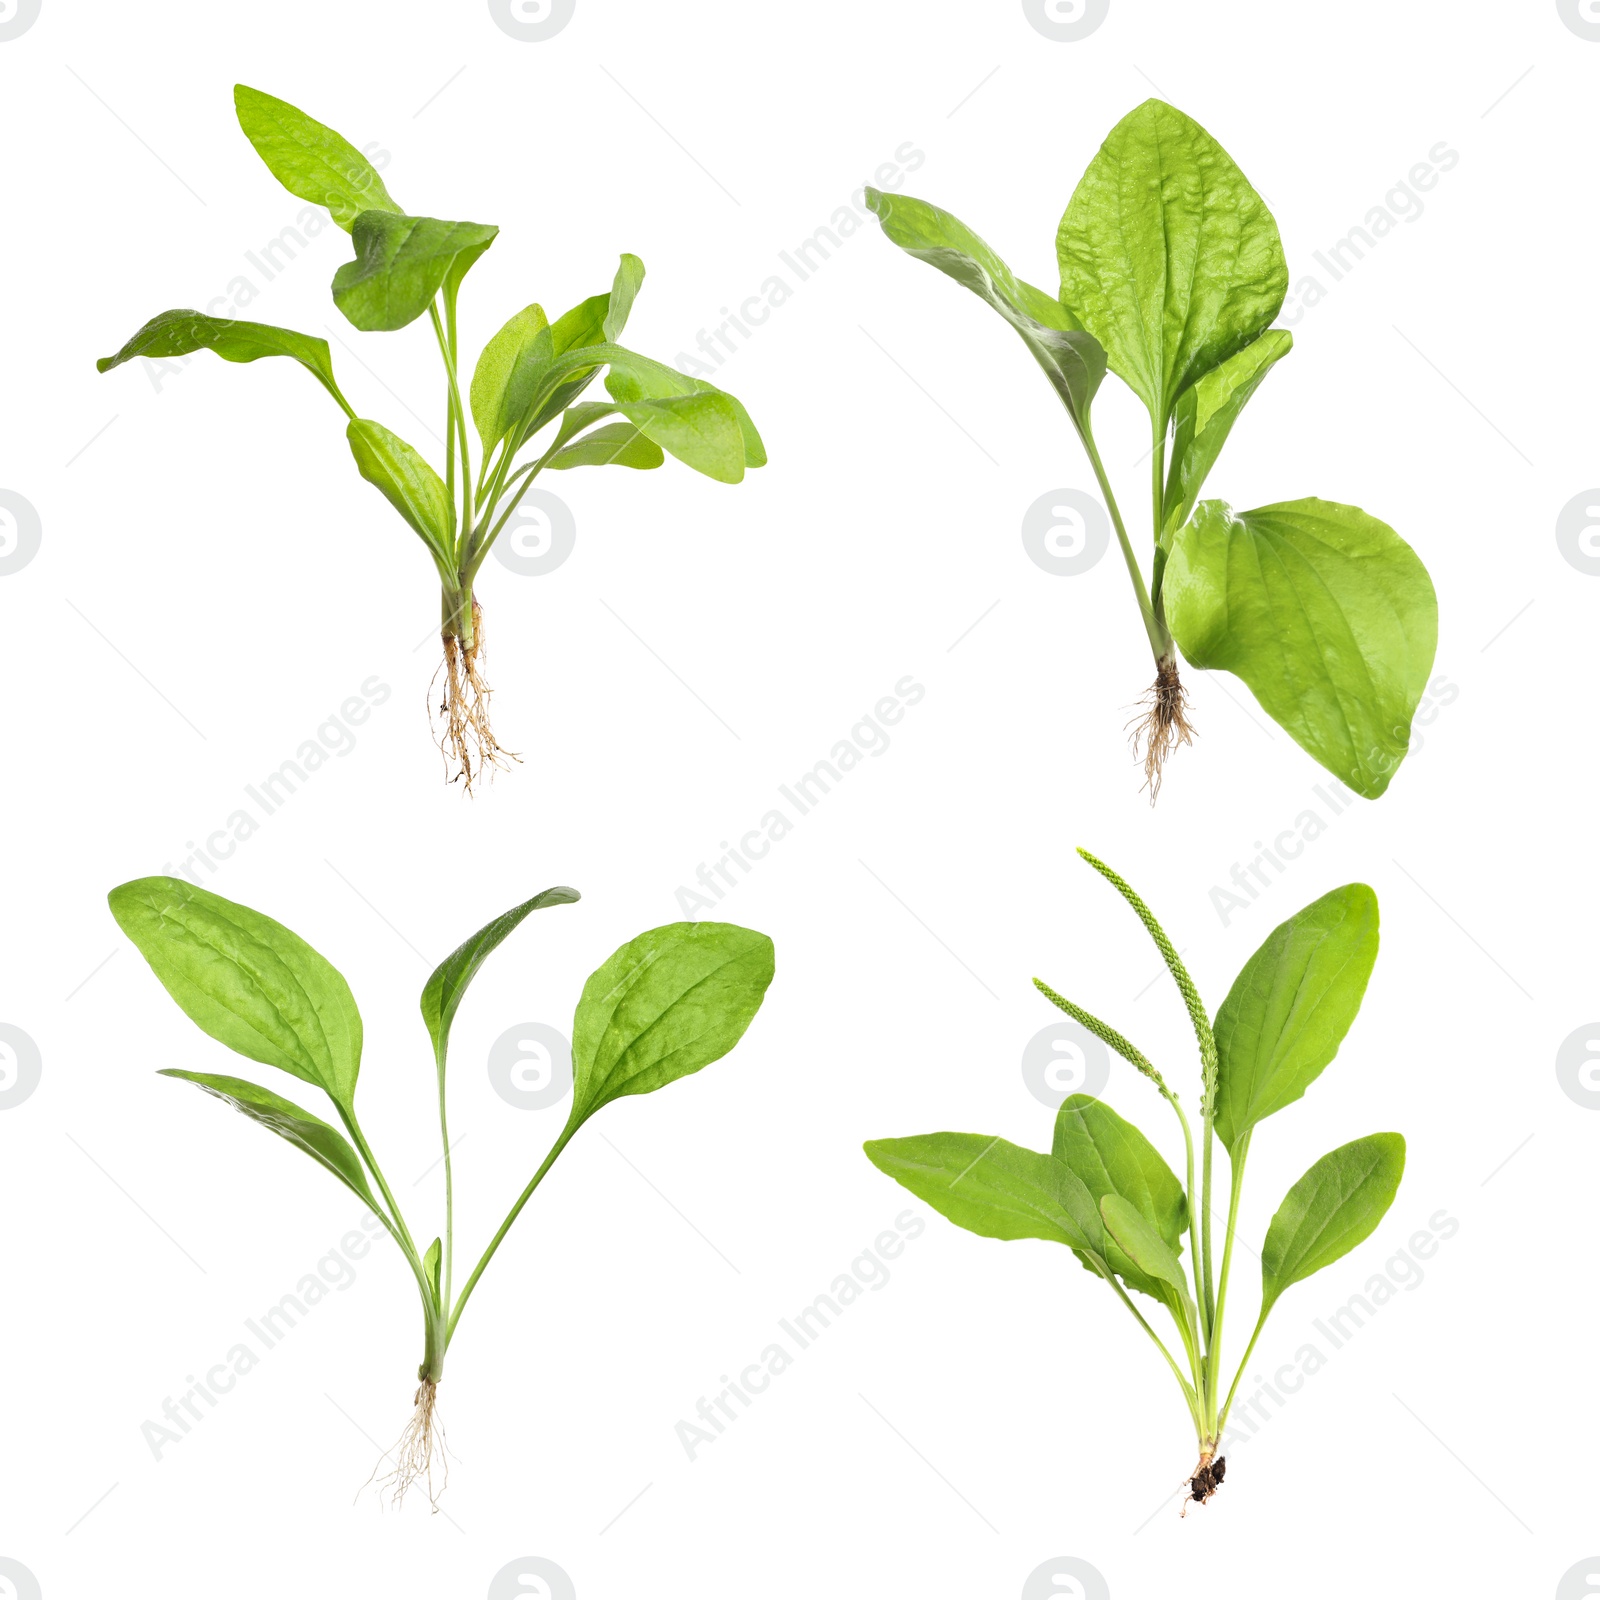 Image of Set with fresh broadleaf plantain plants on white background